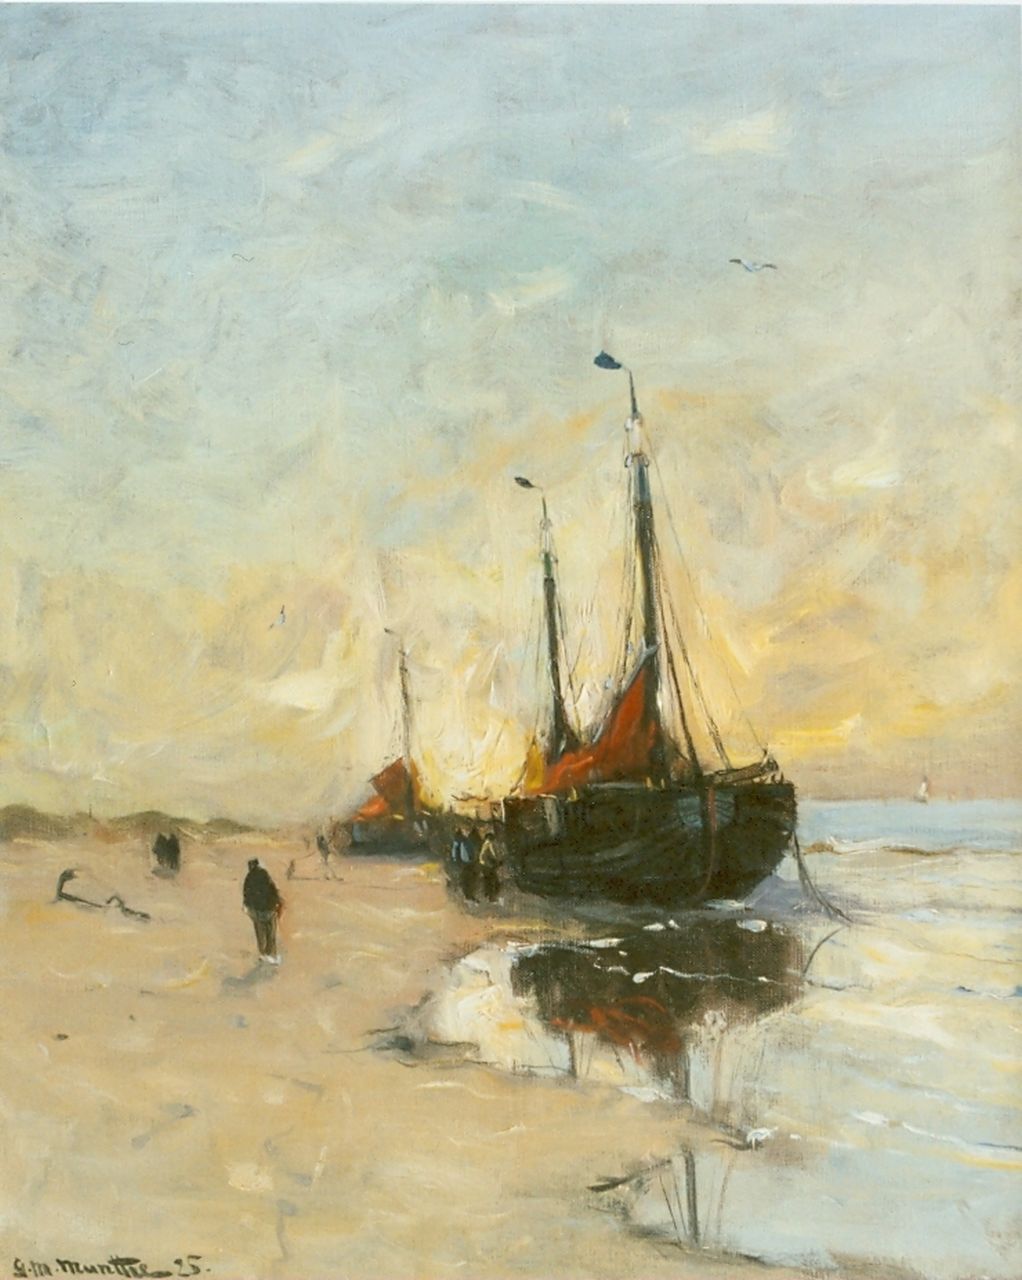 Munthe G.A.L.  | Gerhard Arij Ludwig 'Morgenstjerne' Munthe, 'Bomschuiten' on the beach, oil on canvas 50.5 x 40.5 cm, signed l.l. and dated '25